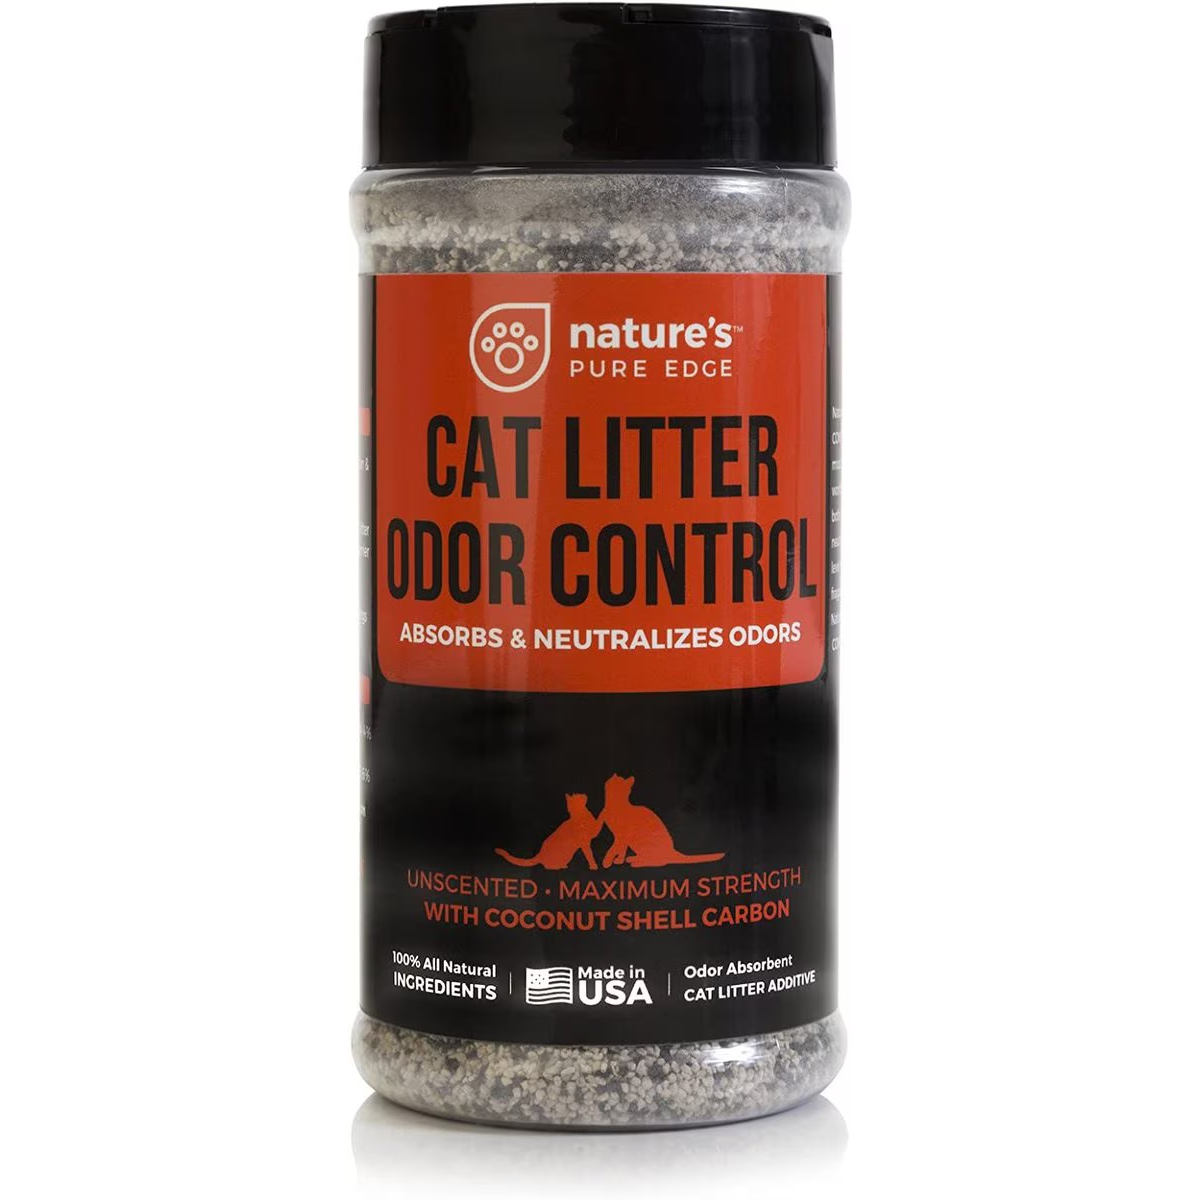 Nature’s Pure Edge Cat Litter Odor Control Deodorizer